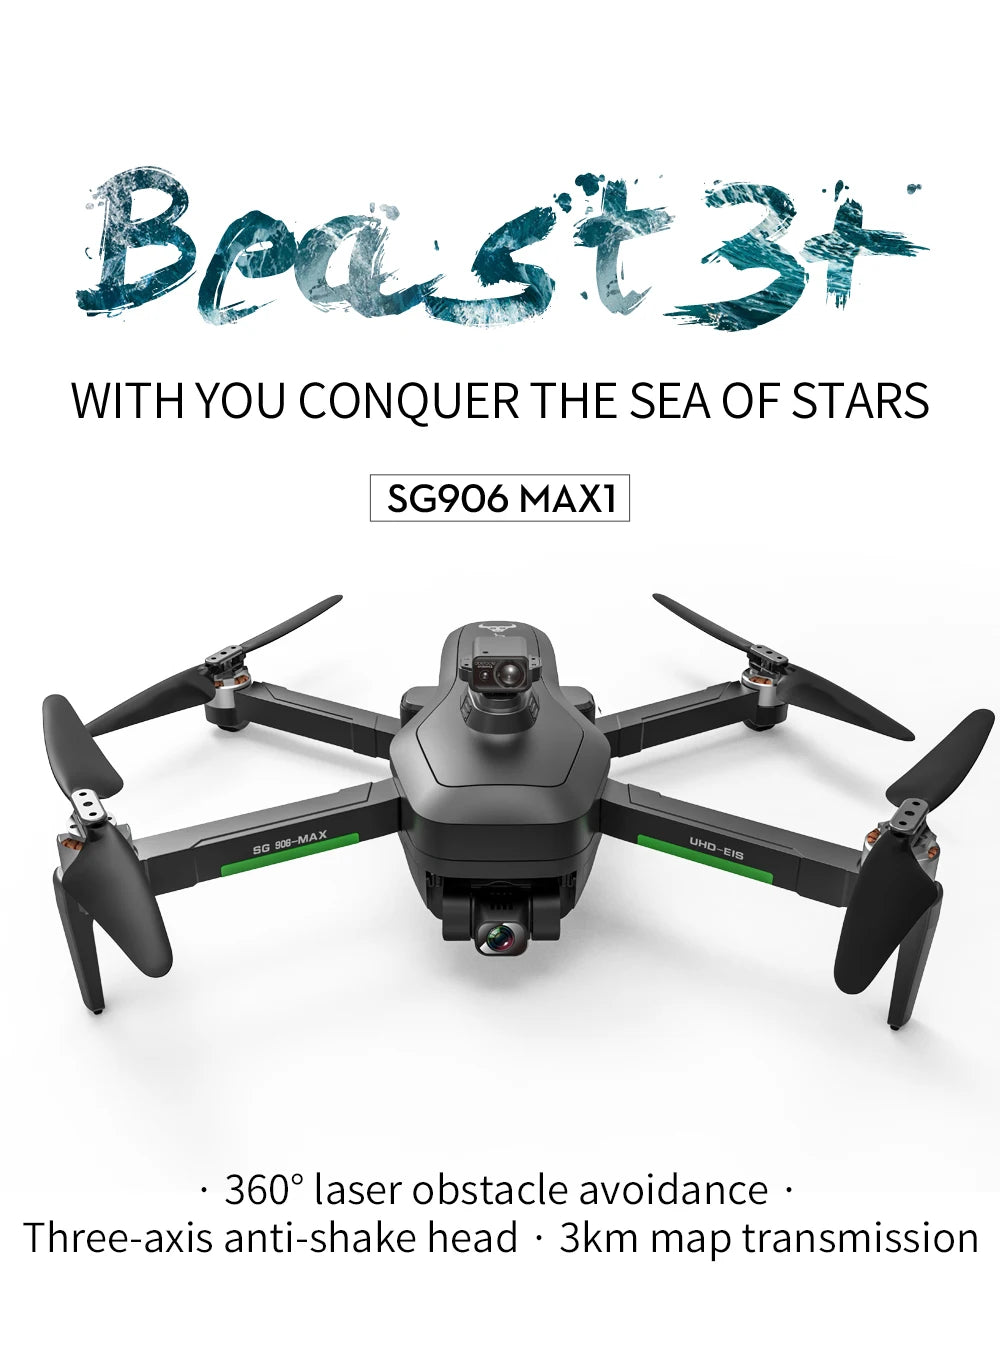 HGIYI SG906 MAX2  Drone, SG9O6 MAXI 5G 906 3608 laser obstacle avoidance 3